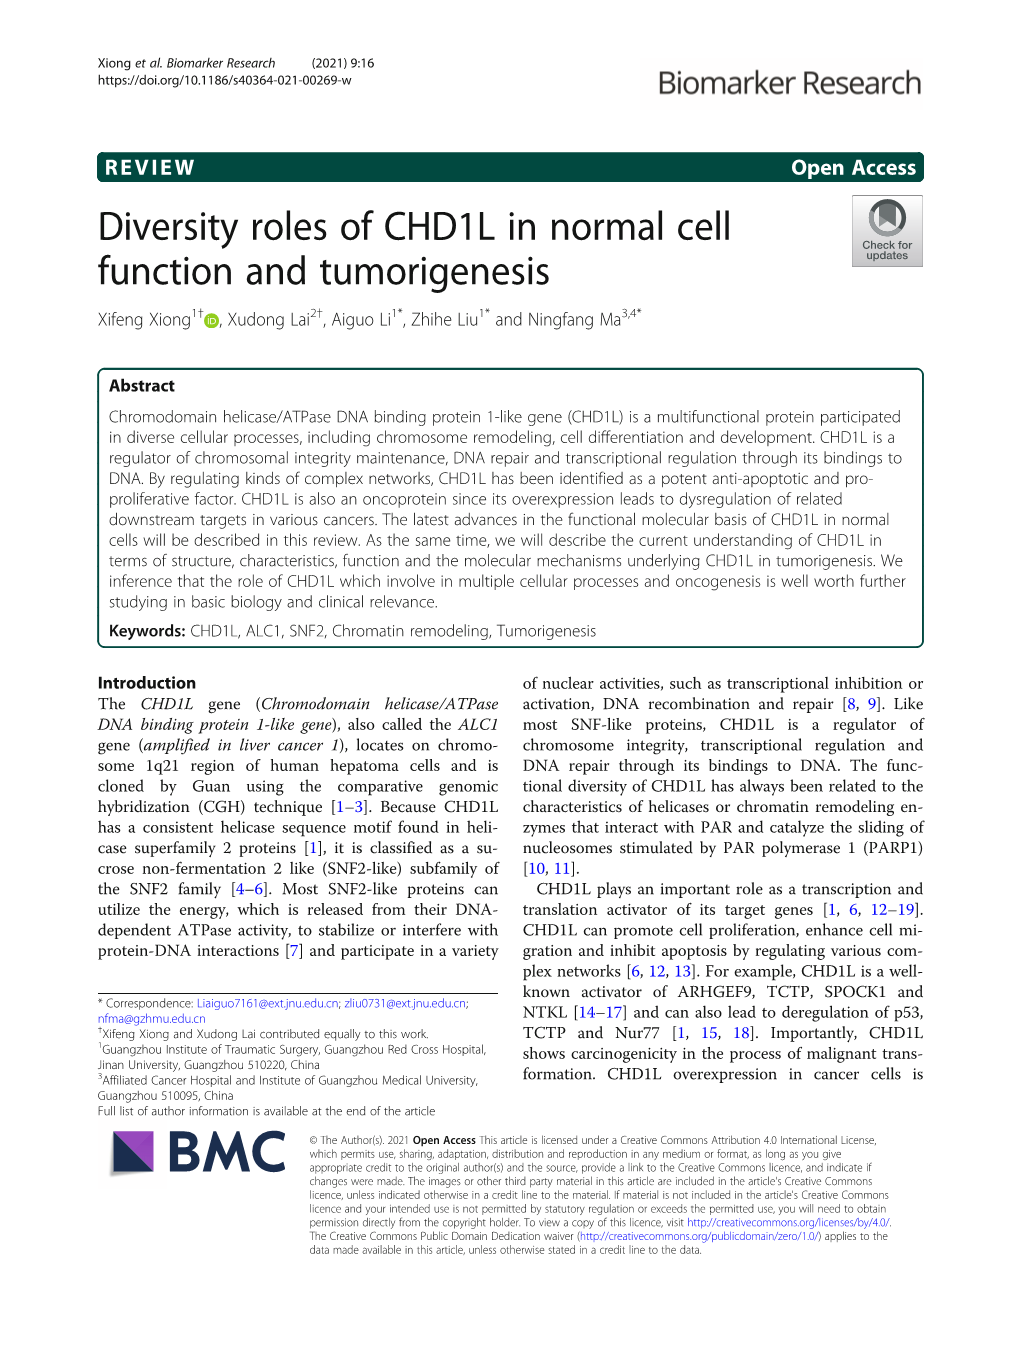 Diversity Roles of CHD1L in Normal Cell Function and Tumorigenesis Xifeng Xiong1† , Xudong Lai2†, Aiguo Li1*, Zhihe Liu1* and Ningfang Ma3,4*